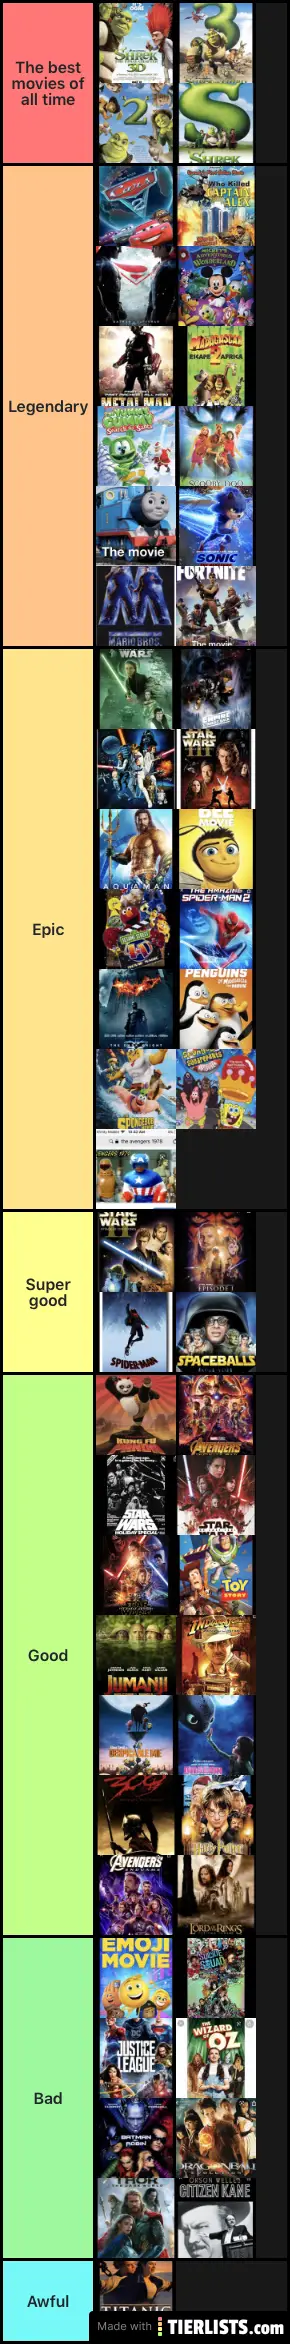 Movies tierlist